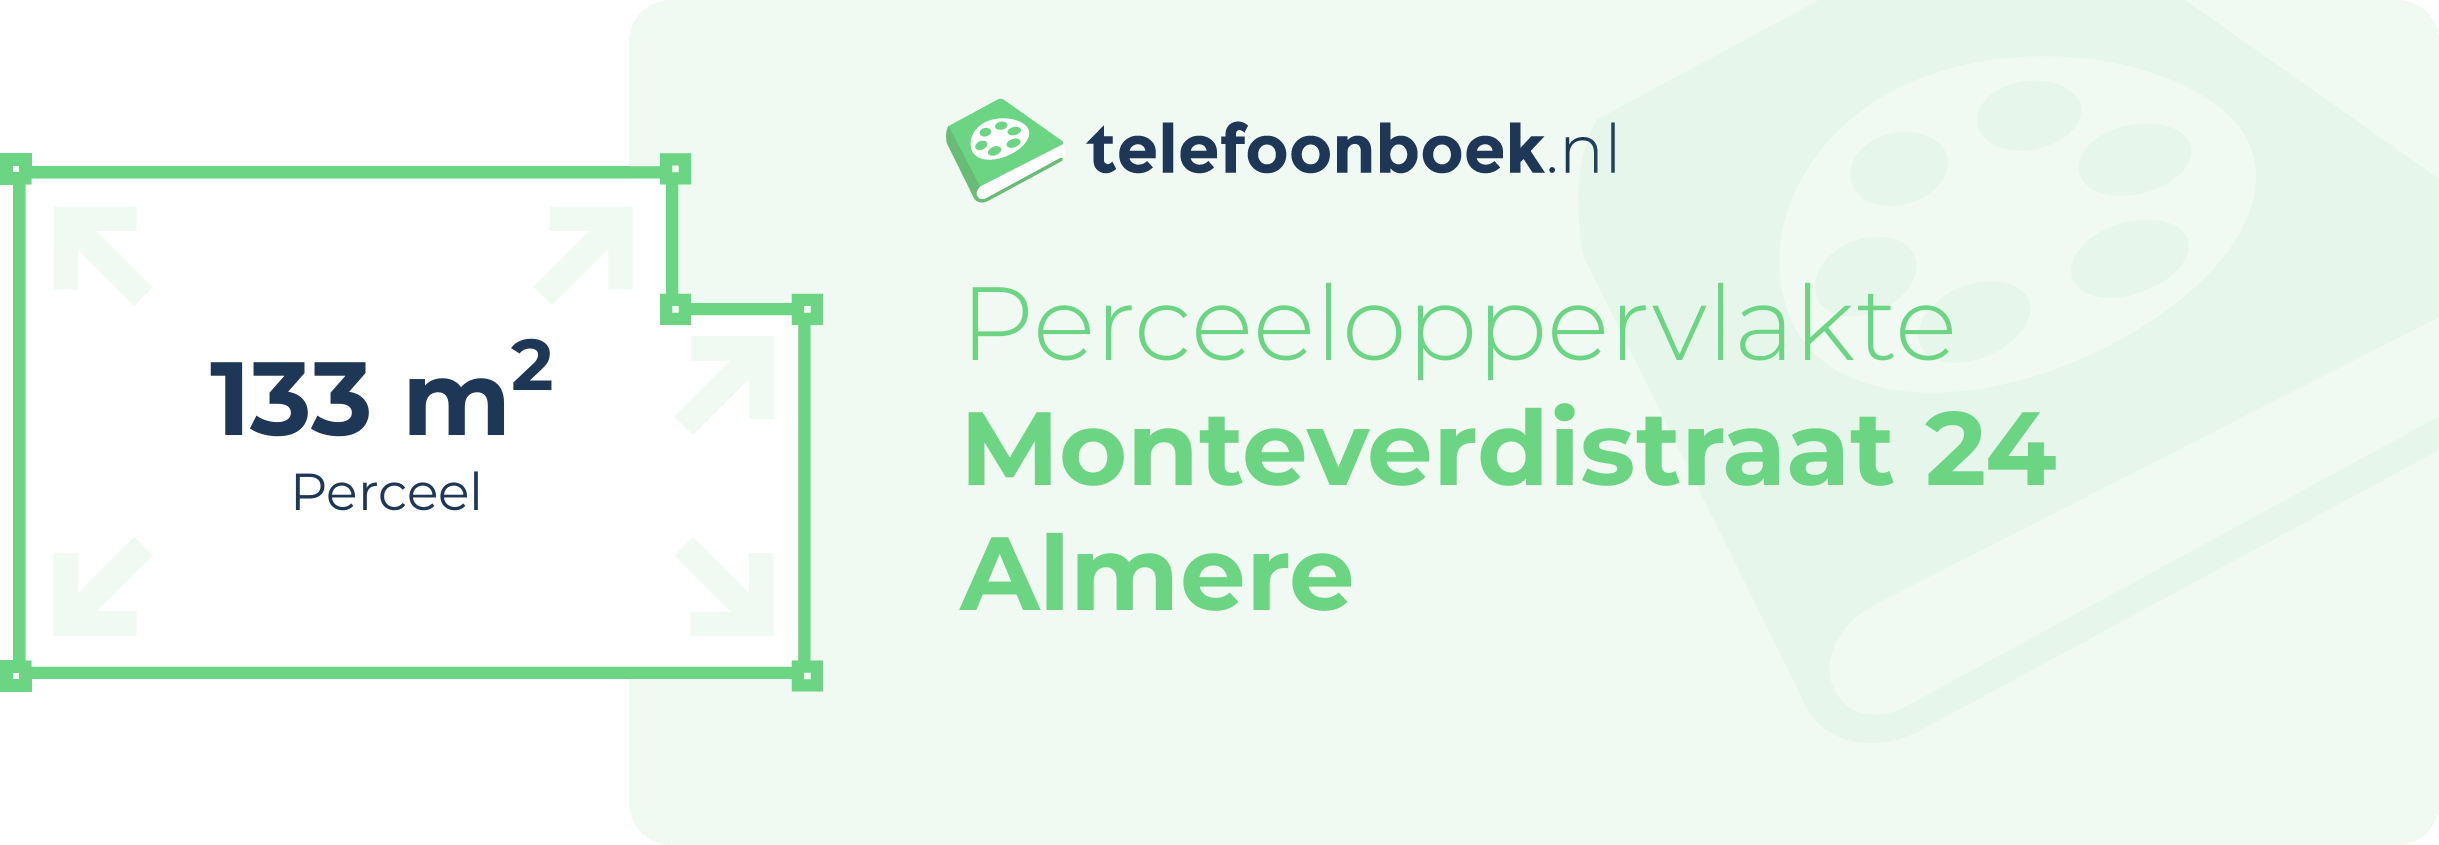 Perceeloppervlakte Monteverdistraat 24 Almere